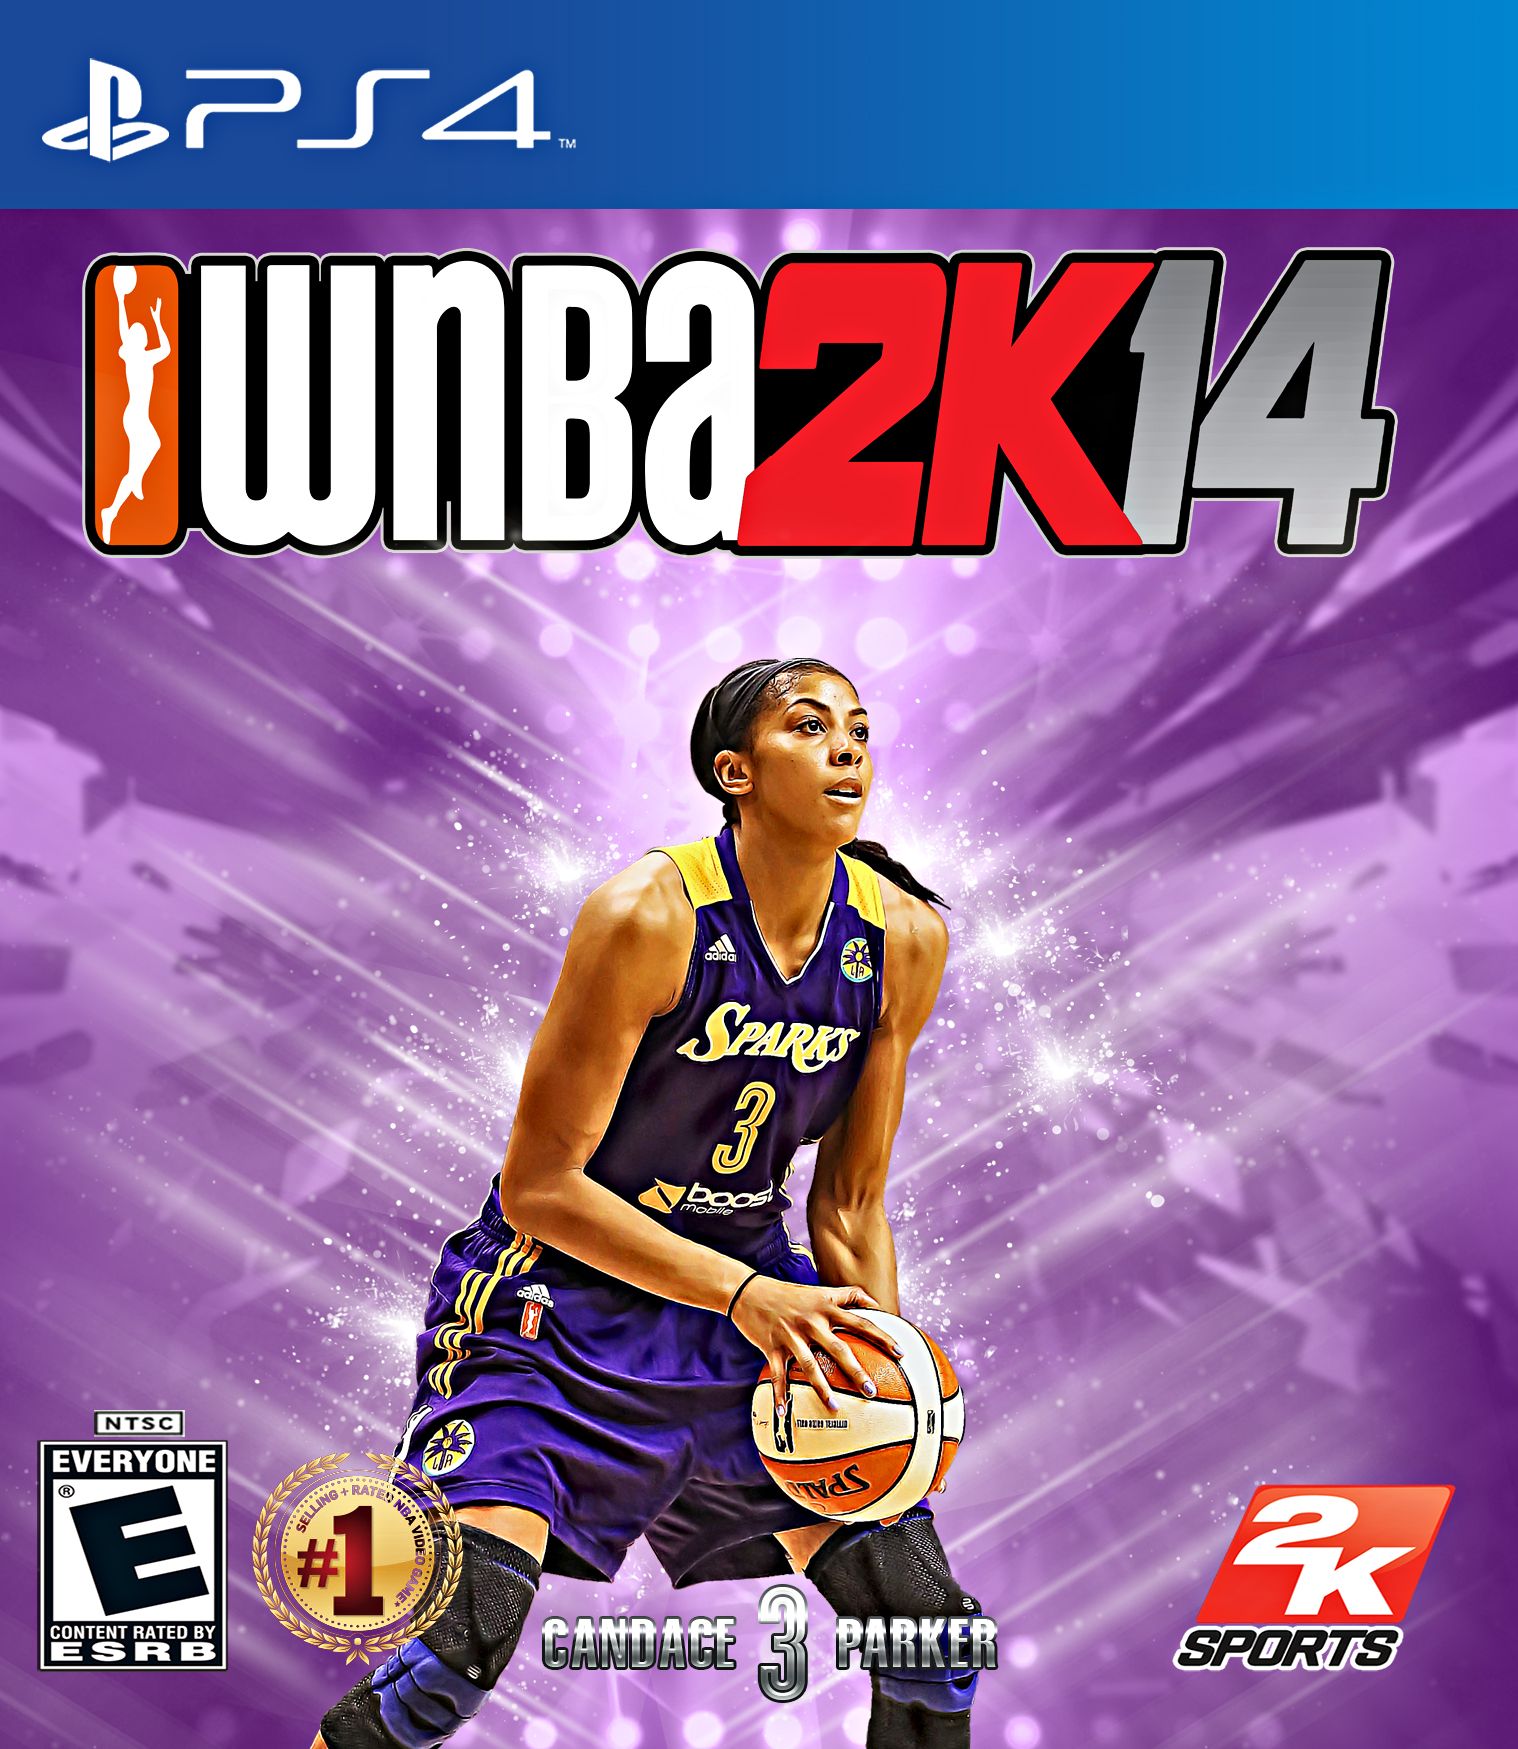 WNBA 2K14: Candace Parker by NO-LooK-PaSS on DeviantArt